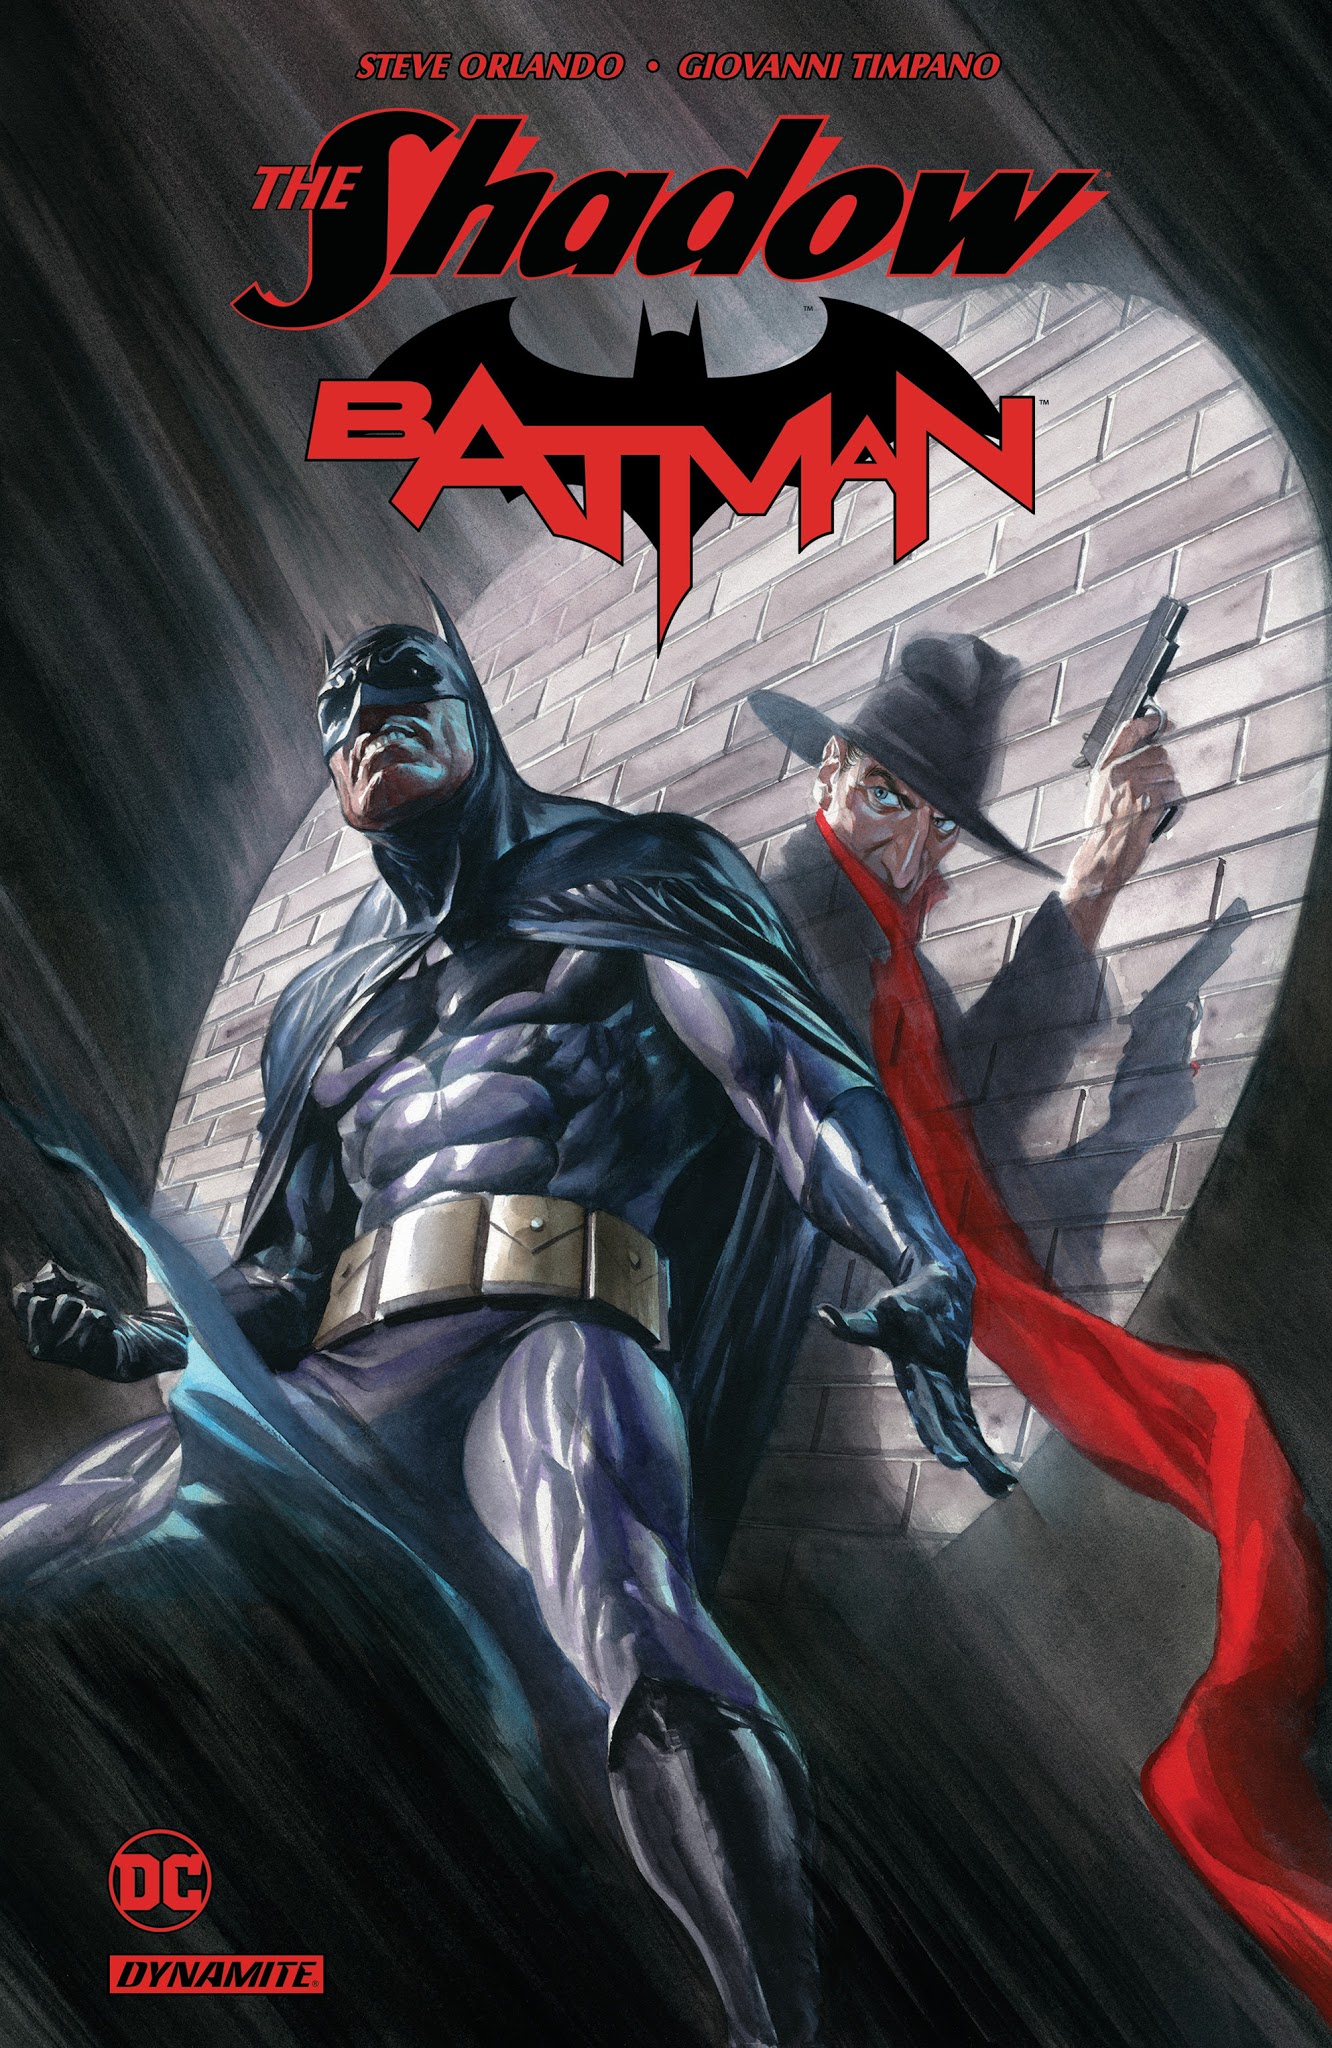 Read online The Shadow/Batman comic -  Issue # _TPB - 1